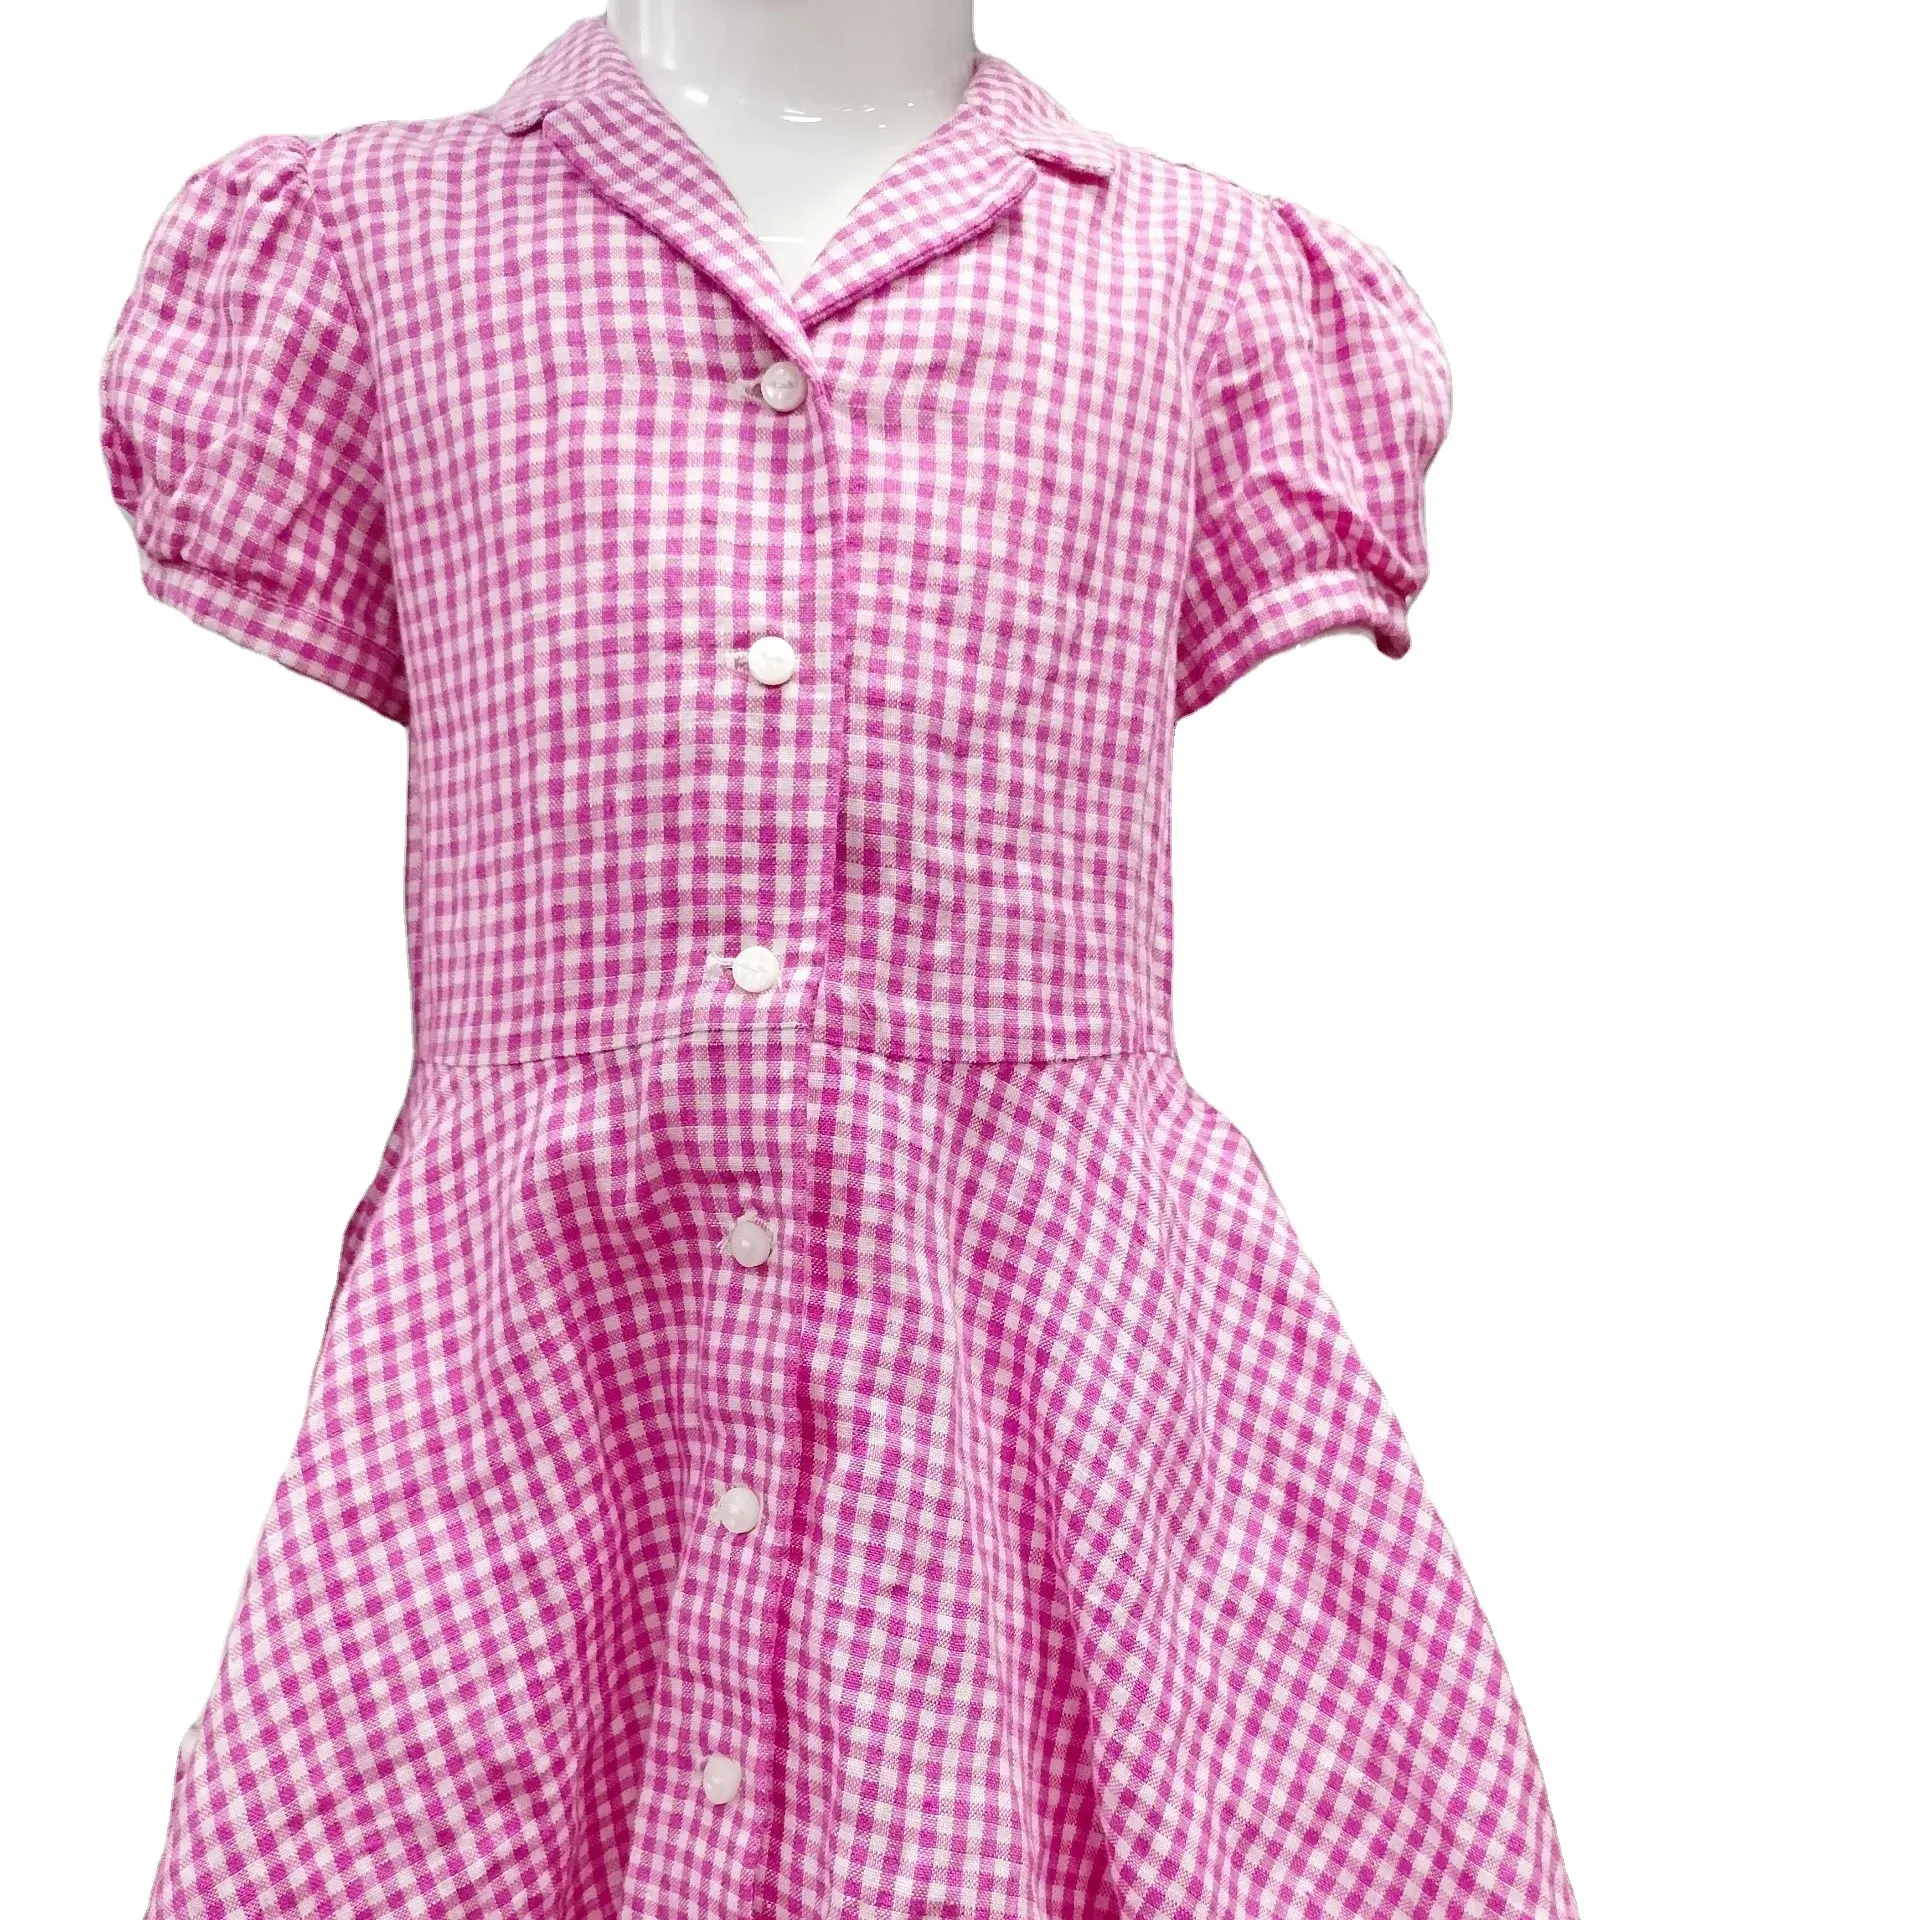 Novo estilo bonito vestido a linha xadrez bordado logotipo personalizar cor meninas vestidos do Viet Nam fabricante